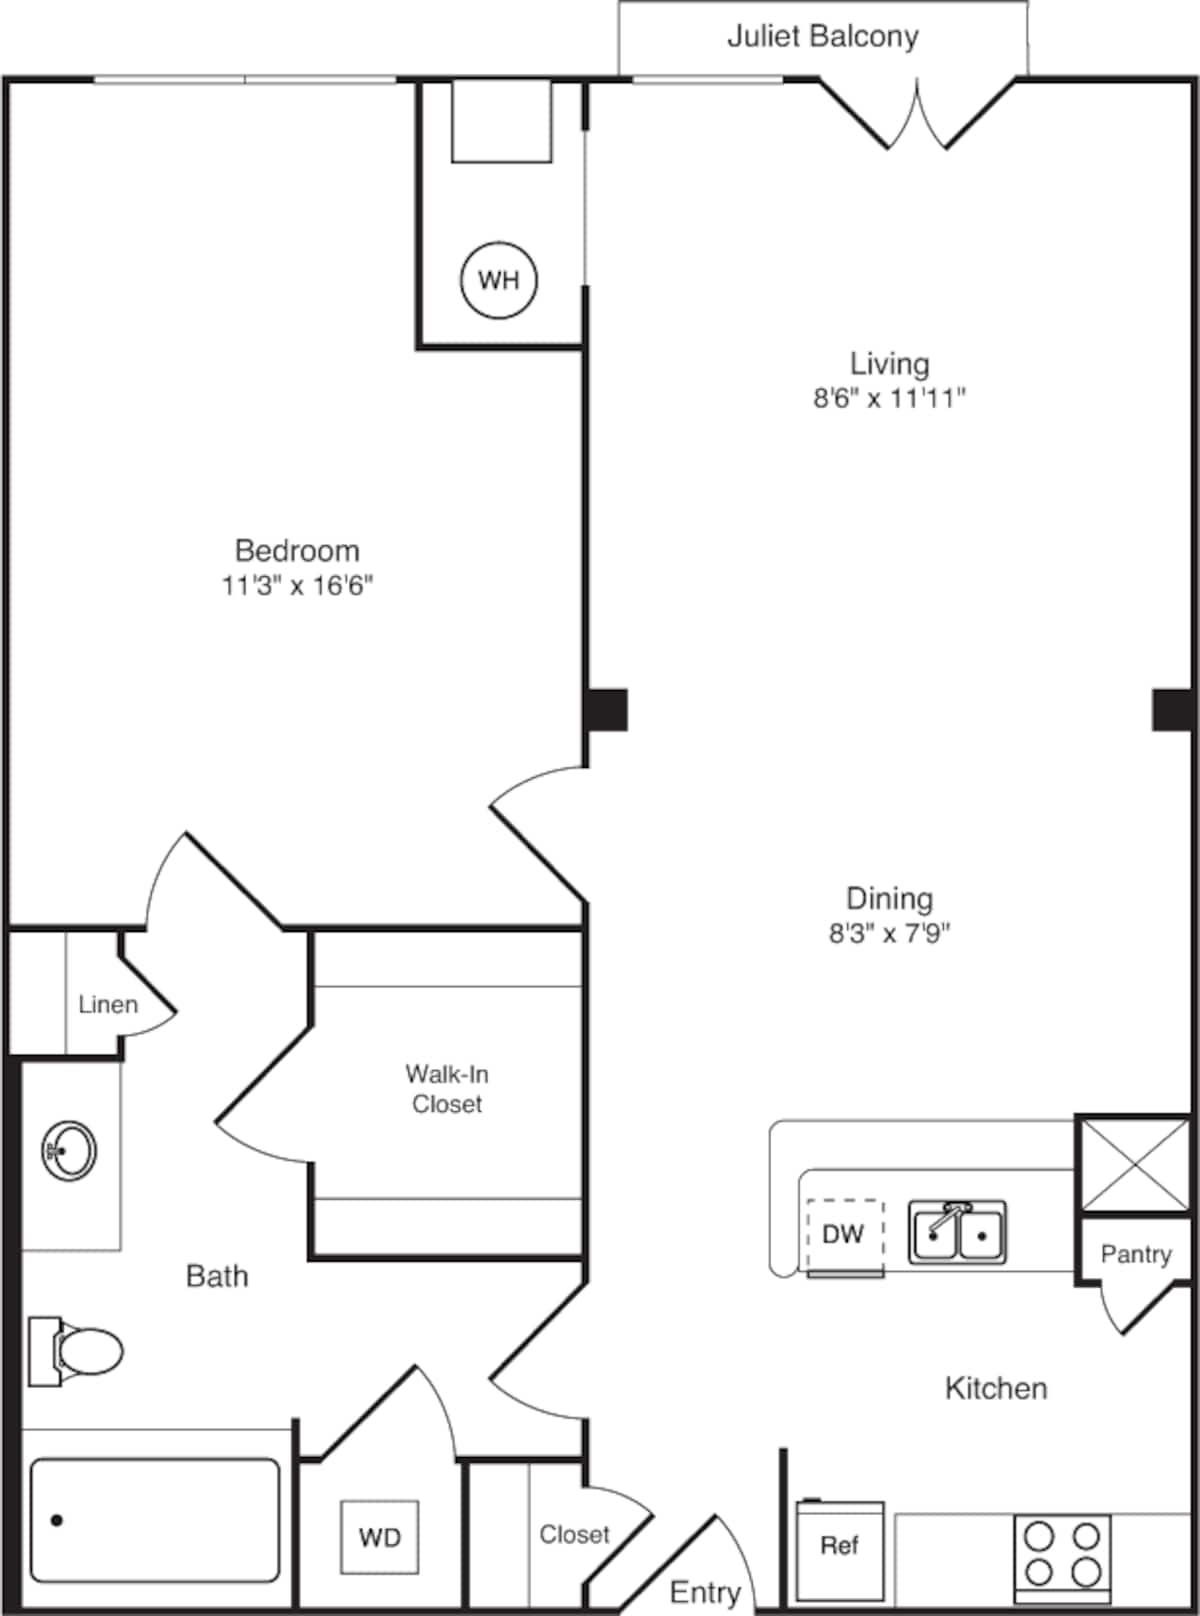 Floorplan diagram for Mellon, showing 1 bedroom